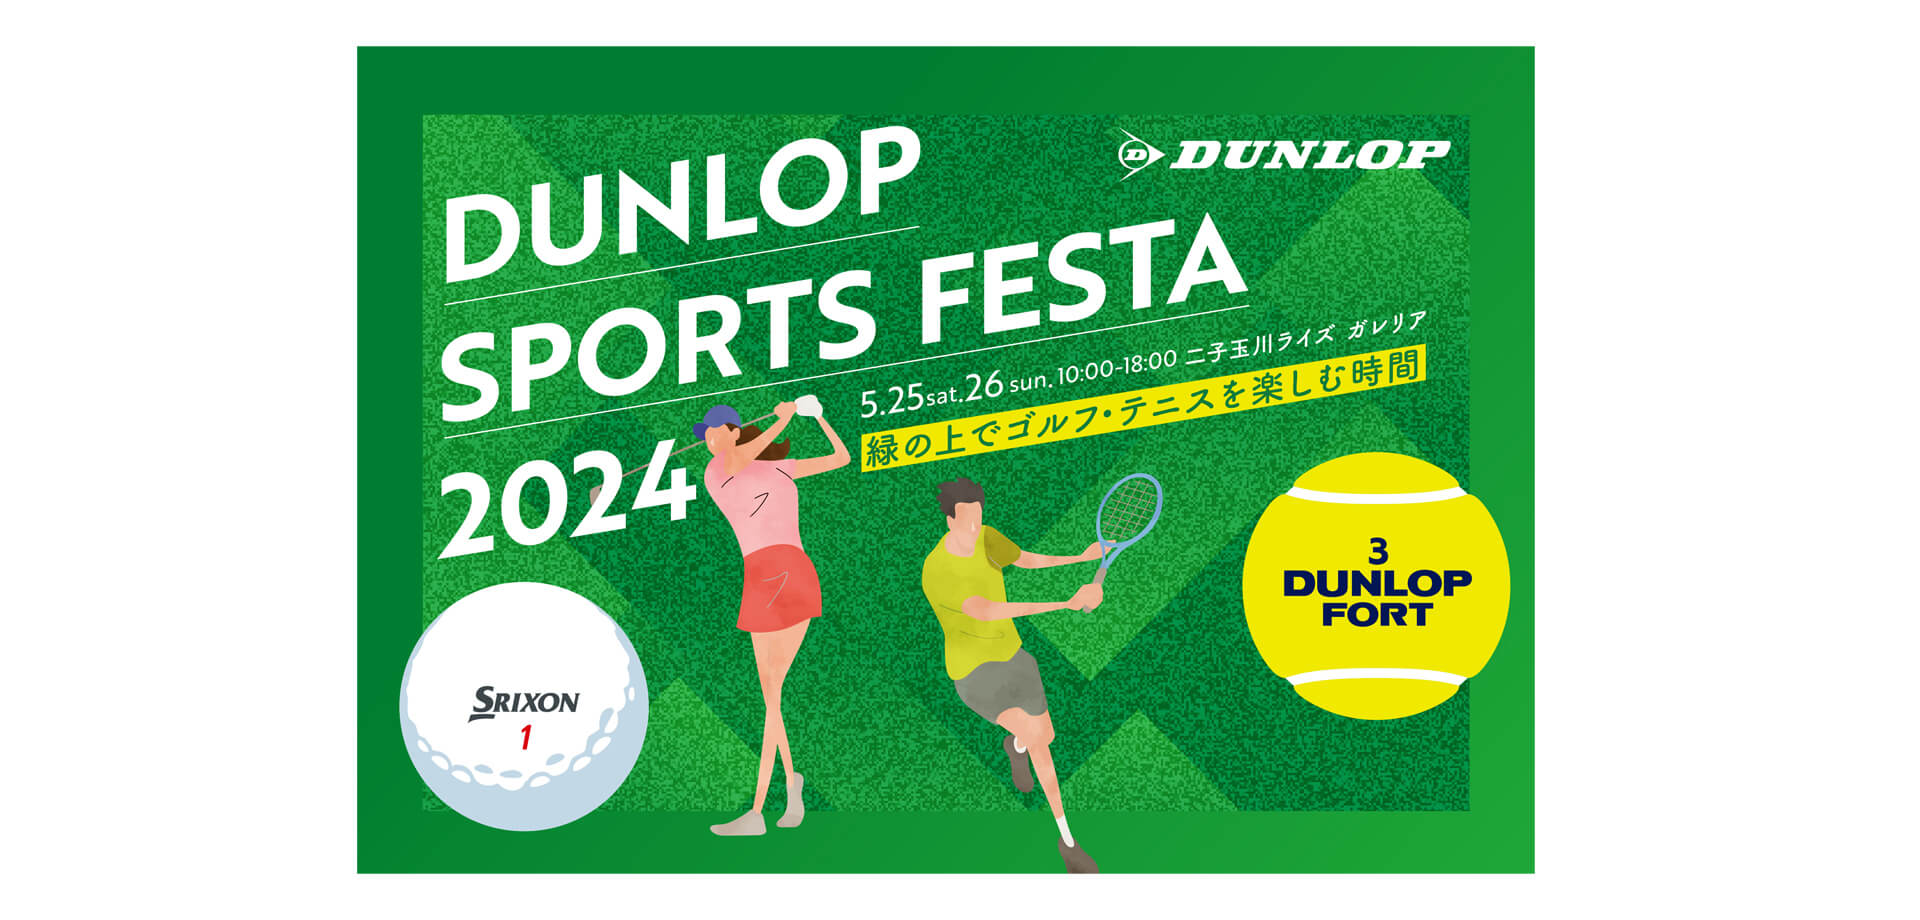 DUNLOP SPORTS FESTA～緑の上でゴルフ・テニスを楽しむ時間～ バナー